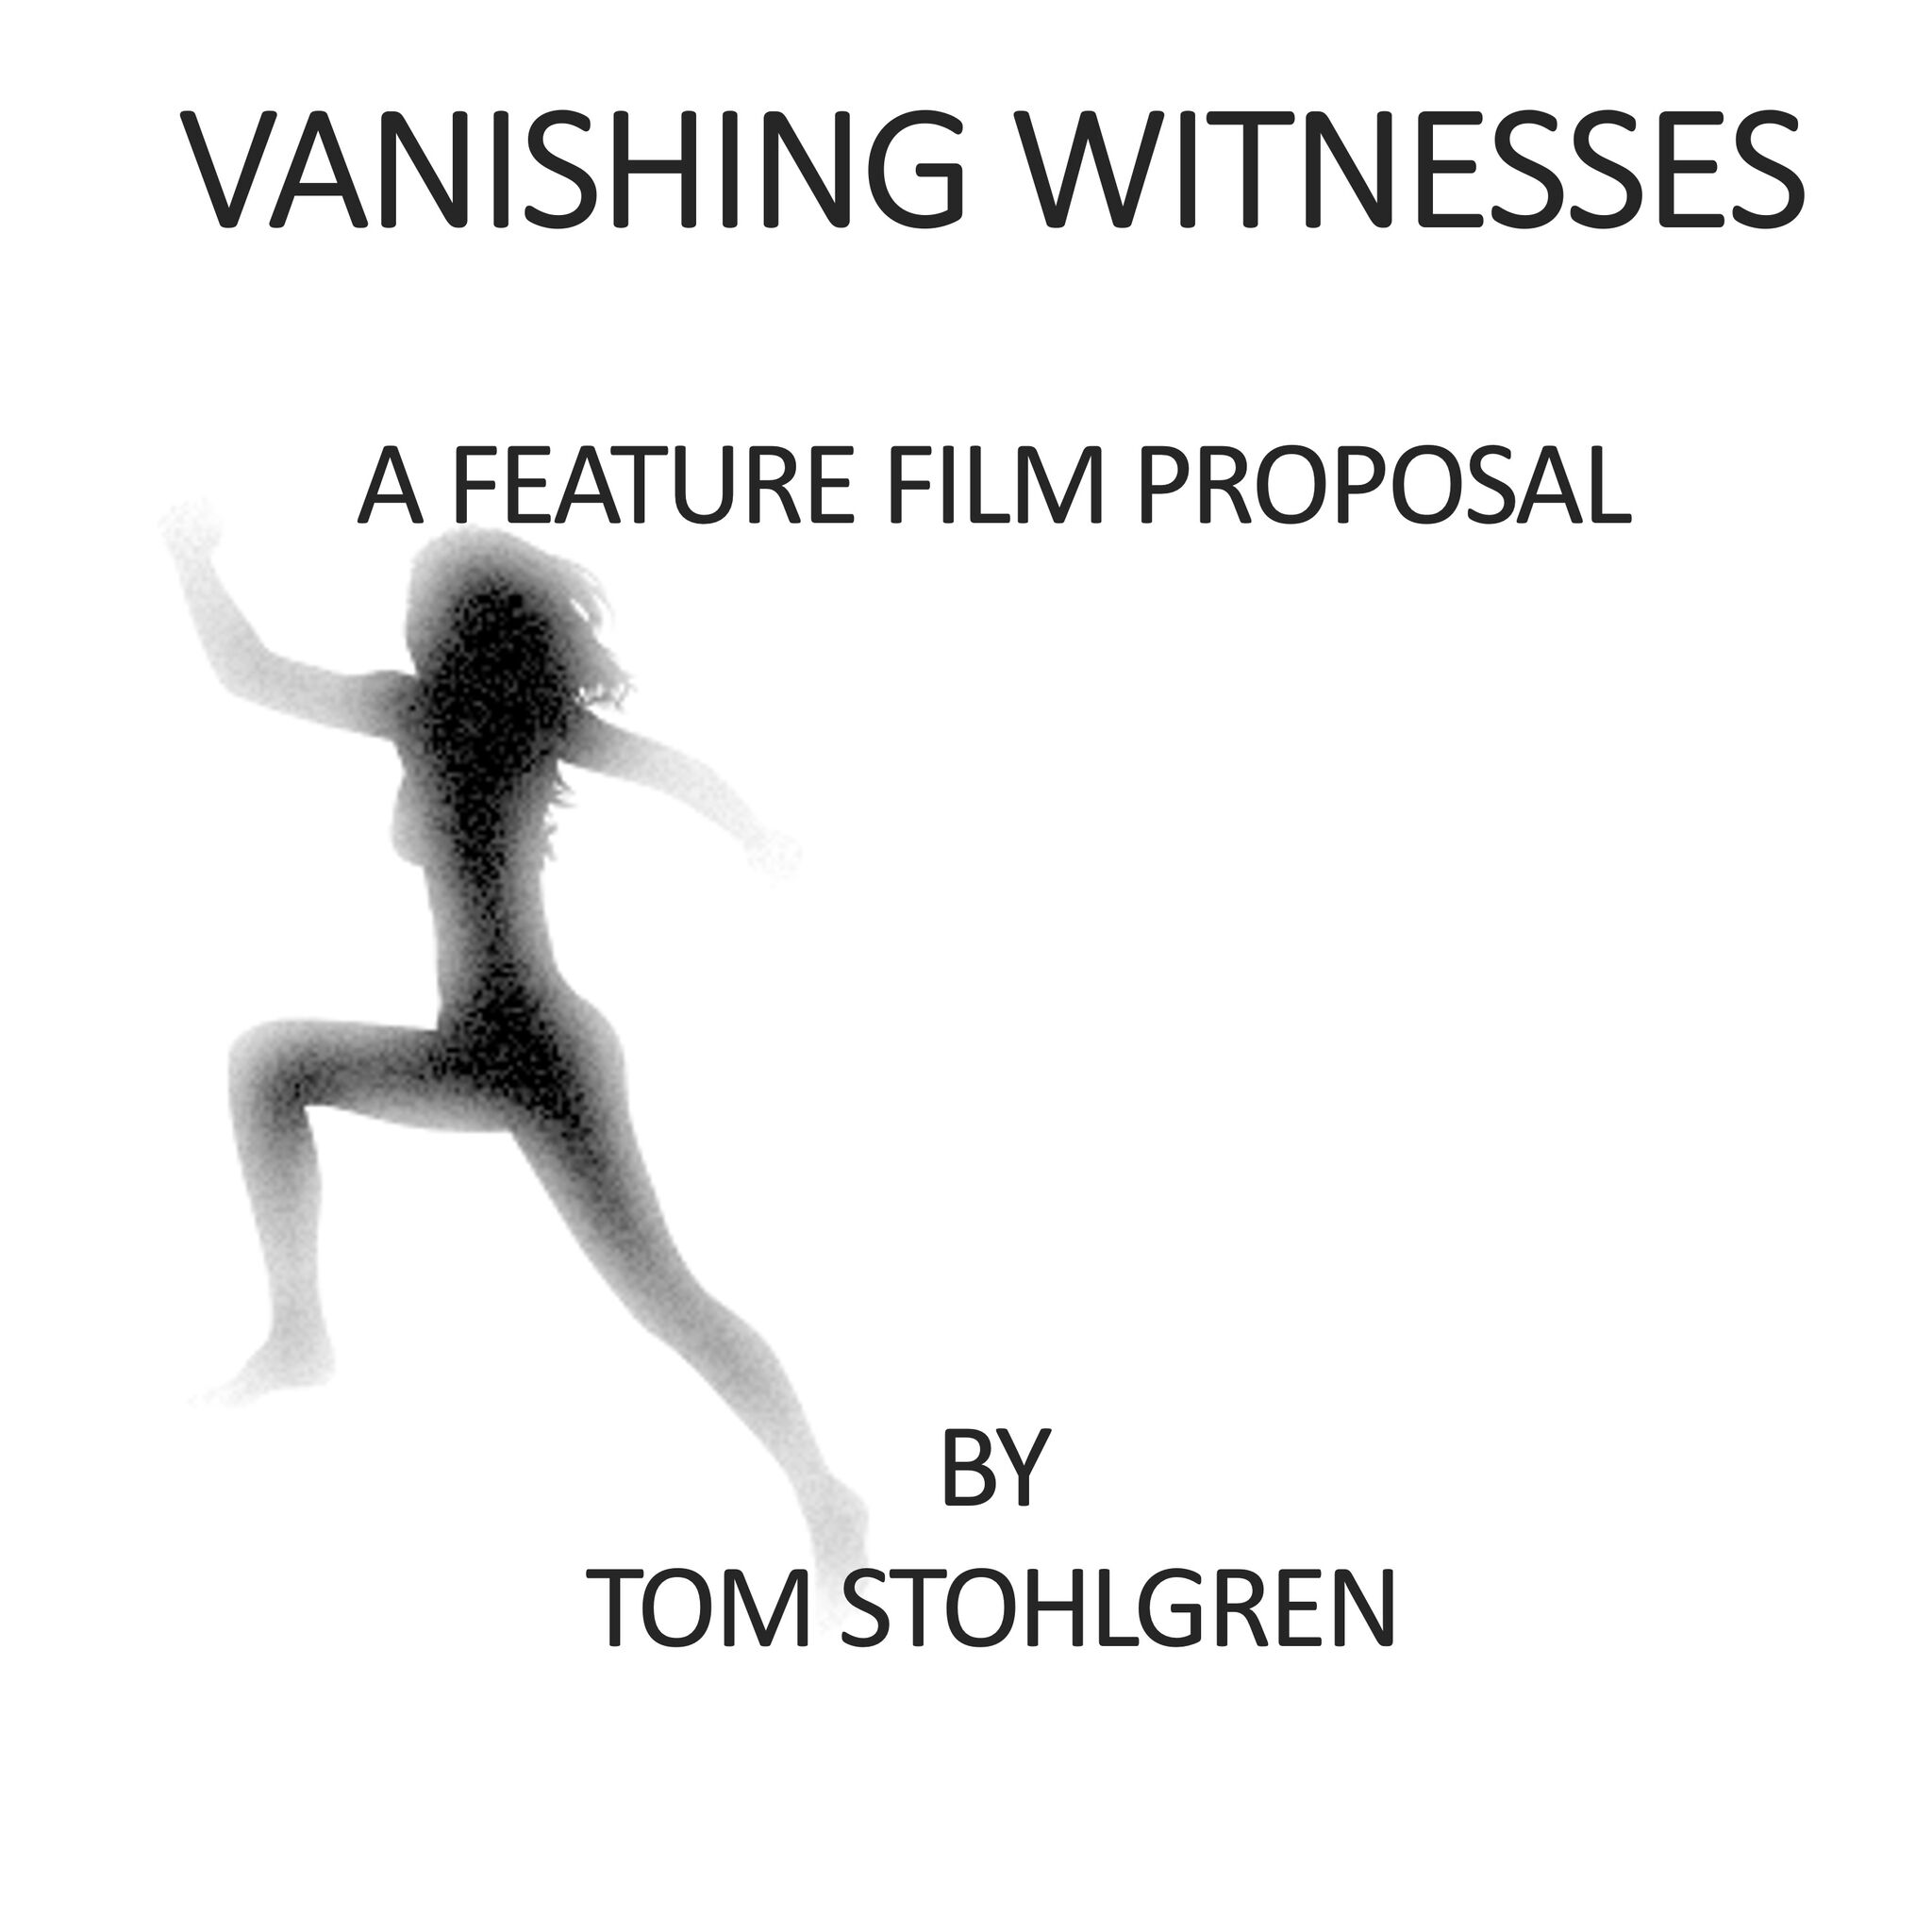 VANISHING WITNESSES